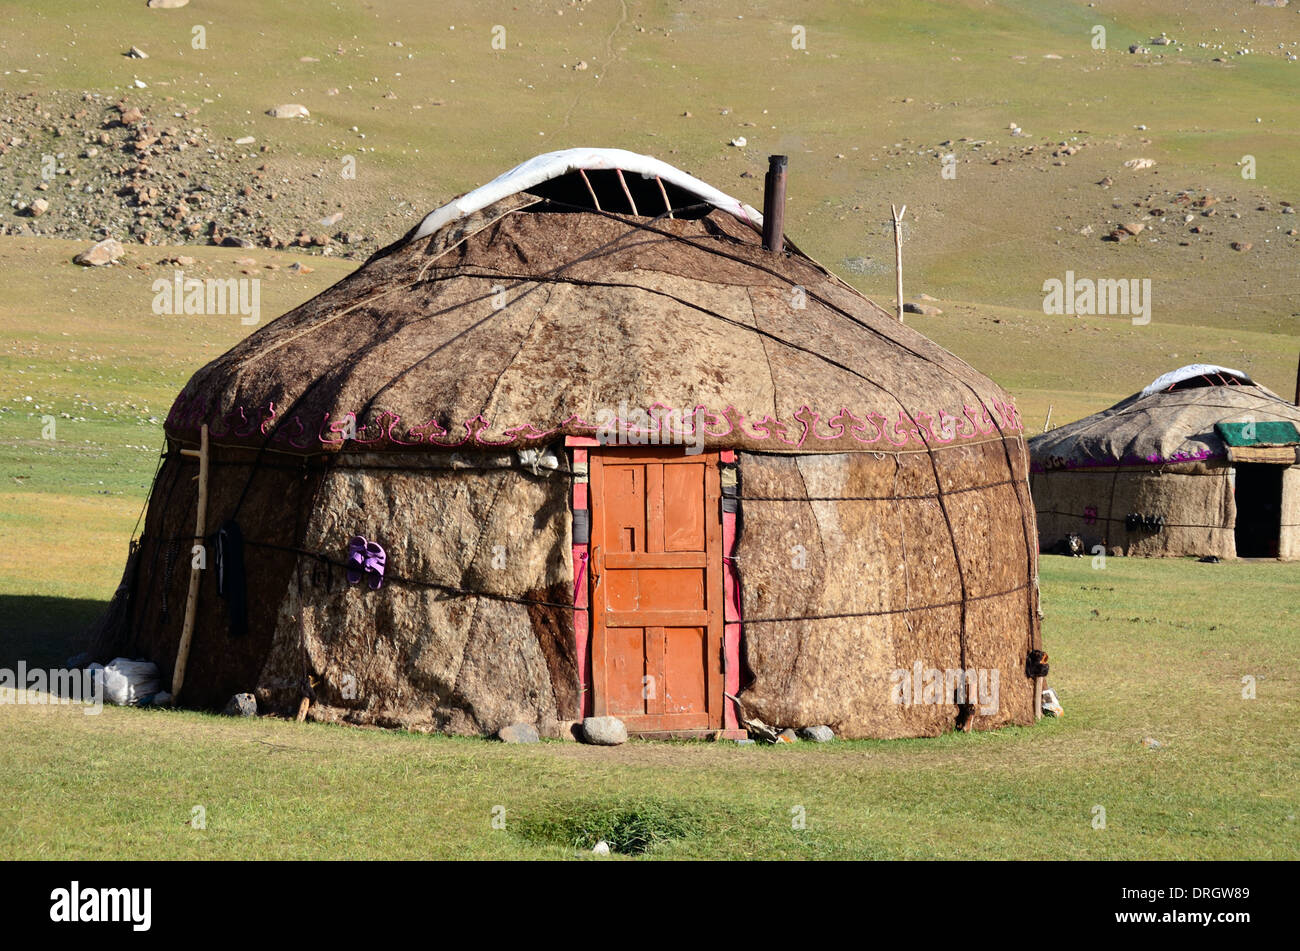 Yurta de Kirguistán en las montañas del sur de Kirguistán Foto de stock